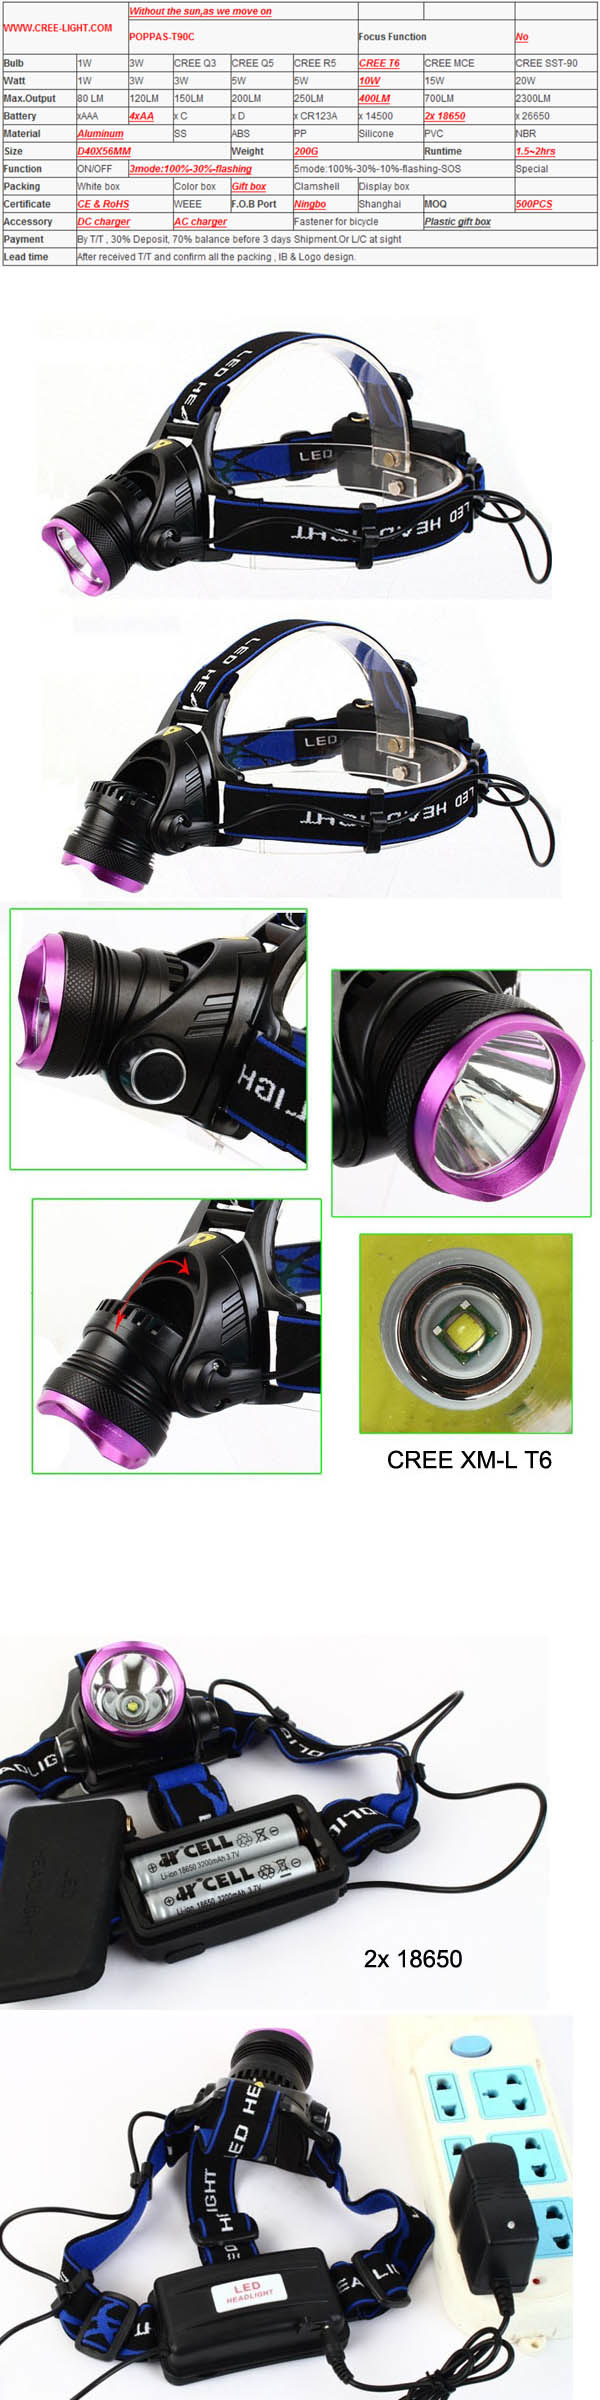 2X 18650 Rechargeable CREE Xm-L T6 LED Headlamp T90c